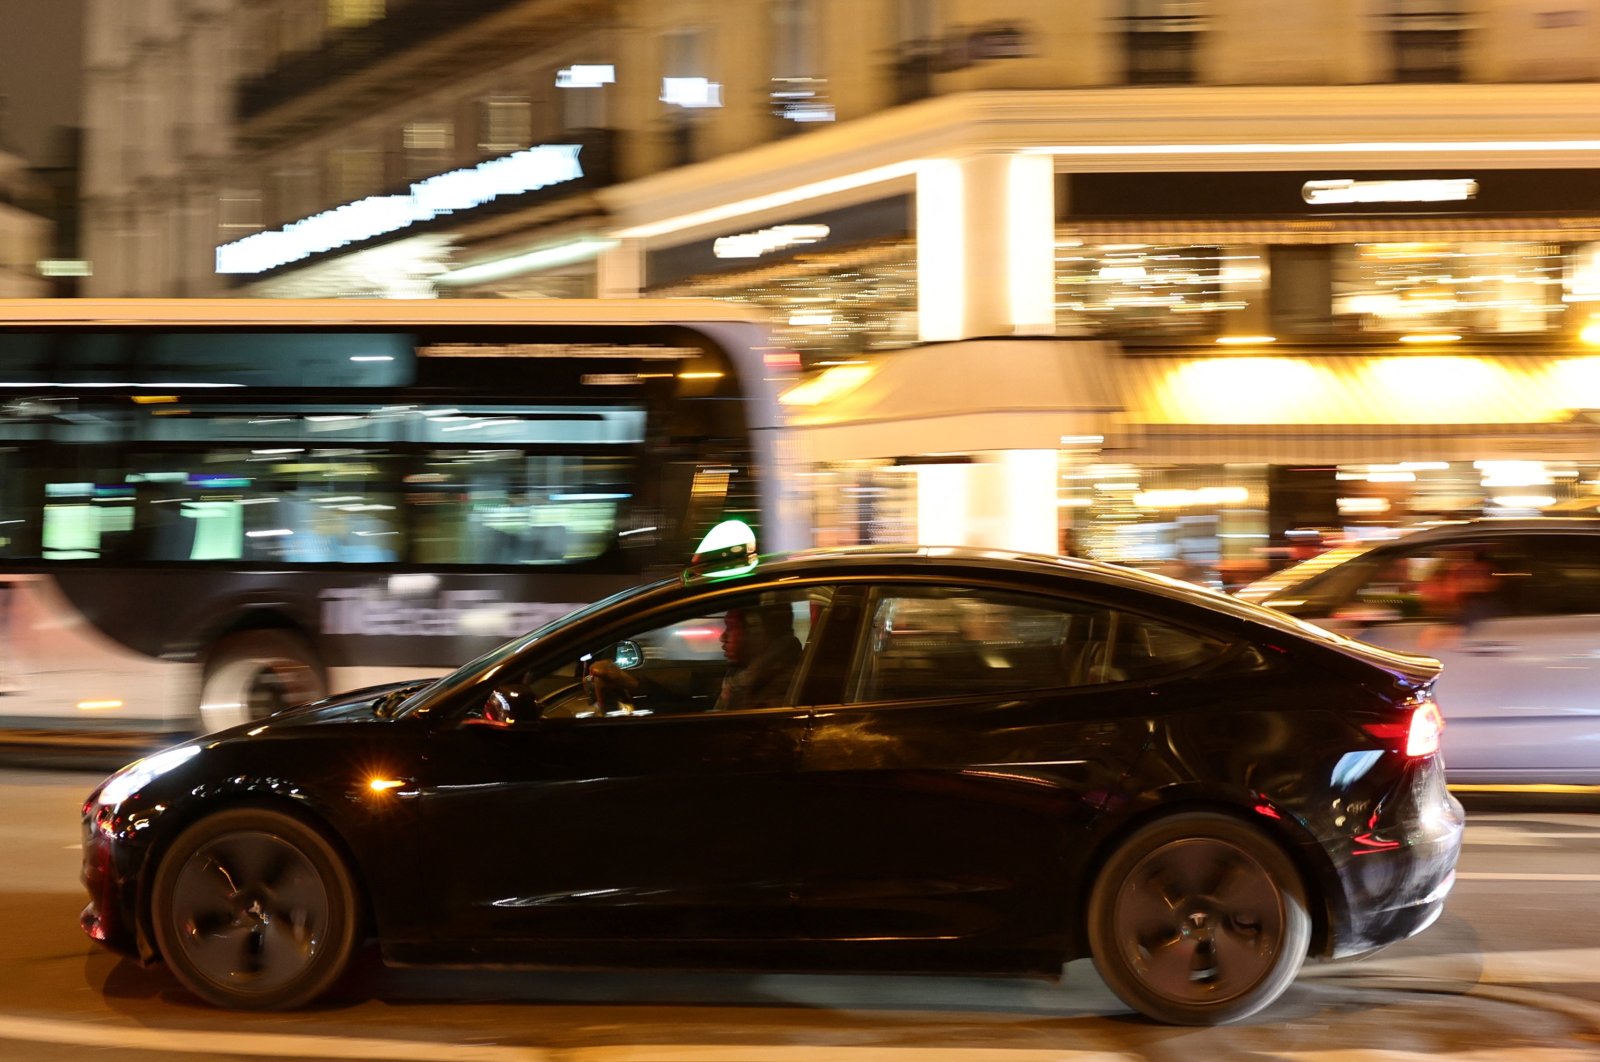 Perusahaan taksi Paris menangguhkan penggunaan mobil Tesla setelah kecelakaan maut